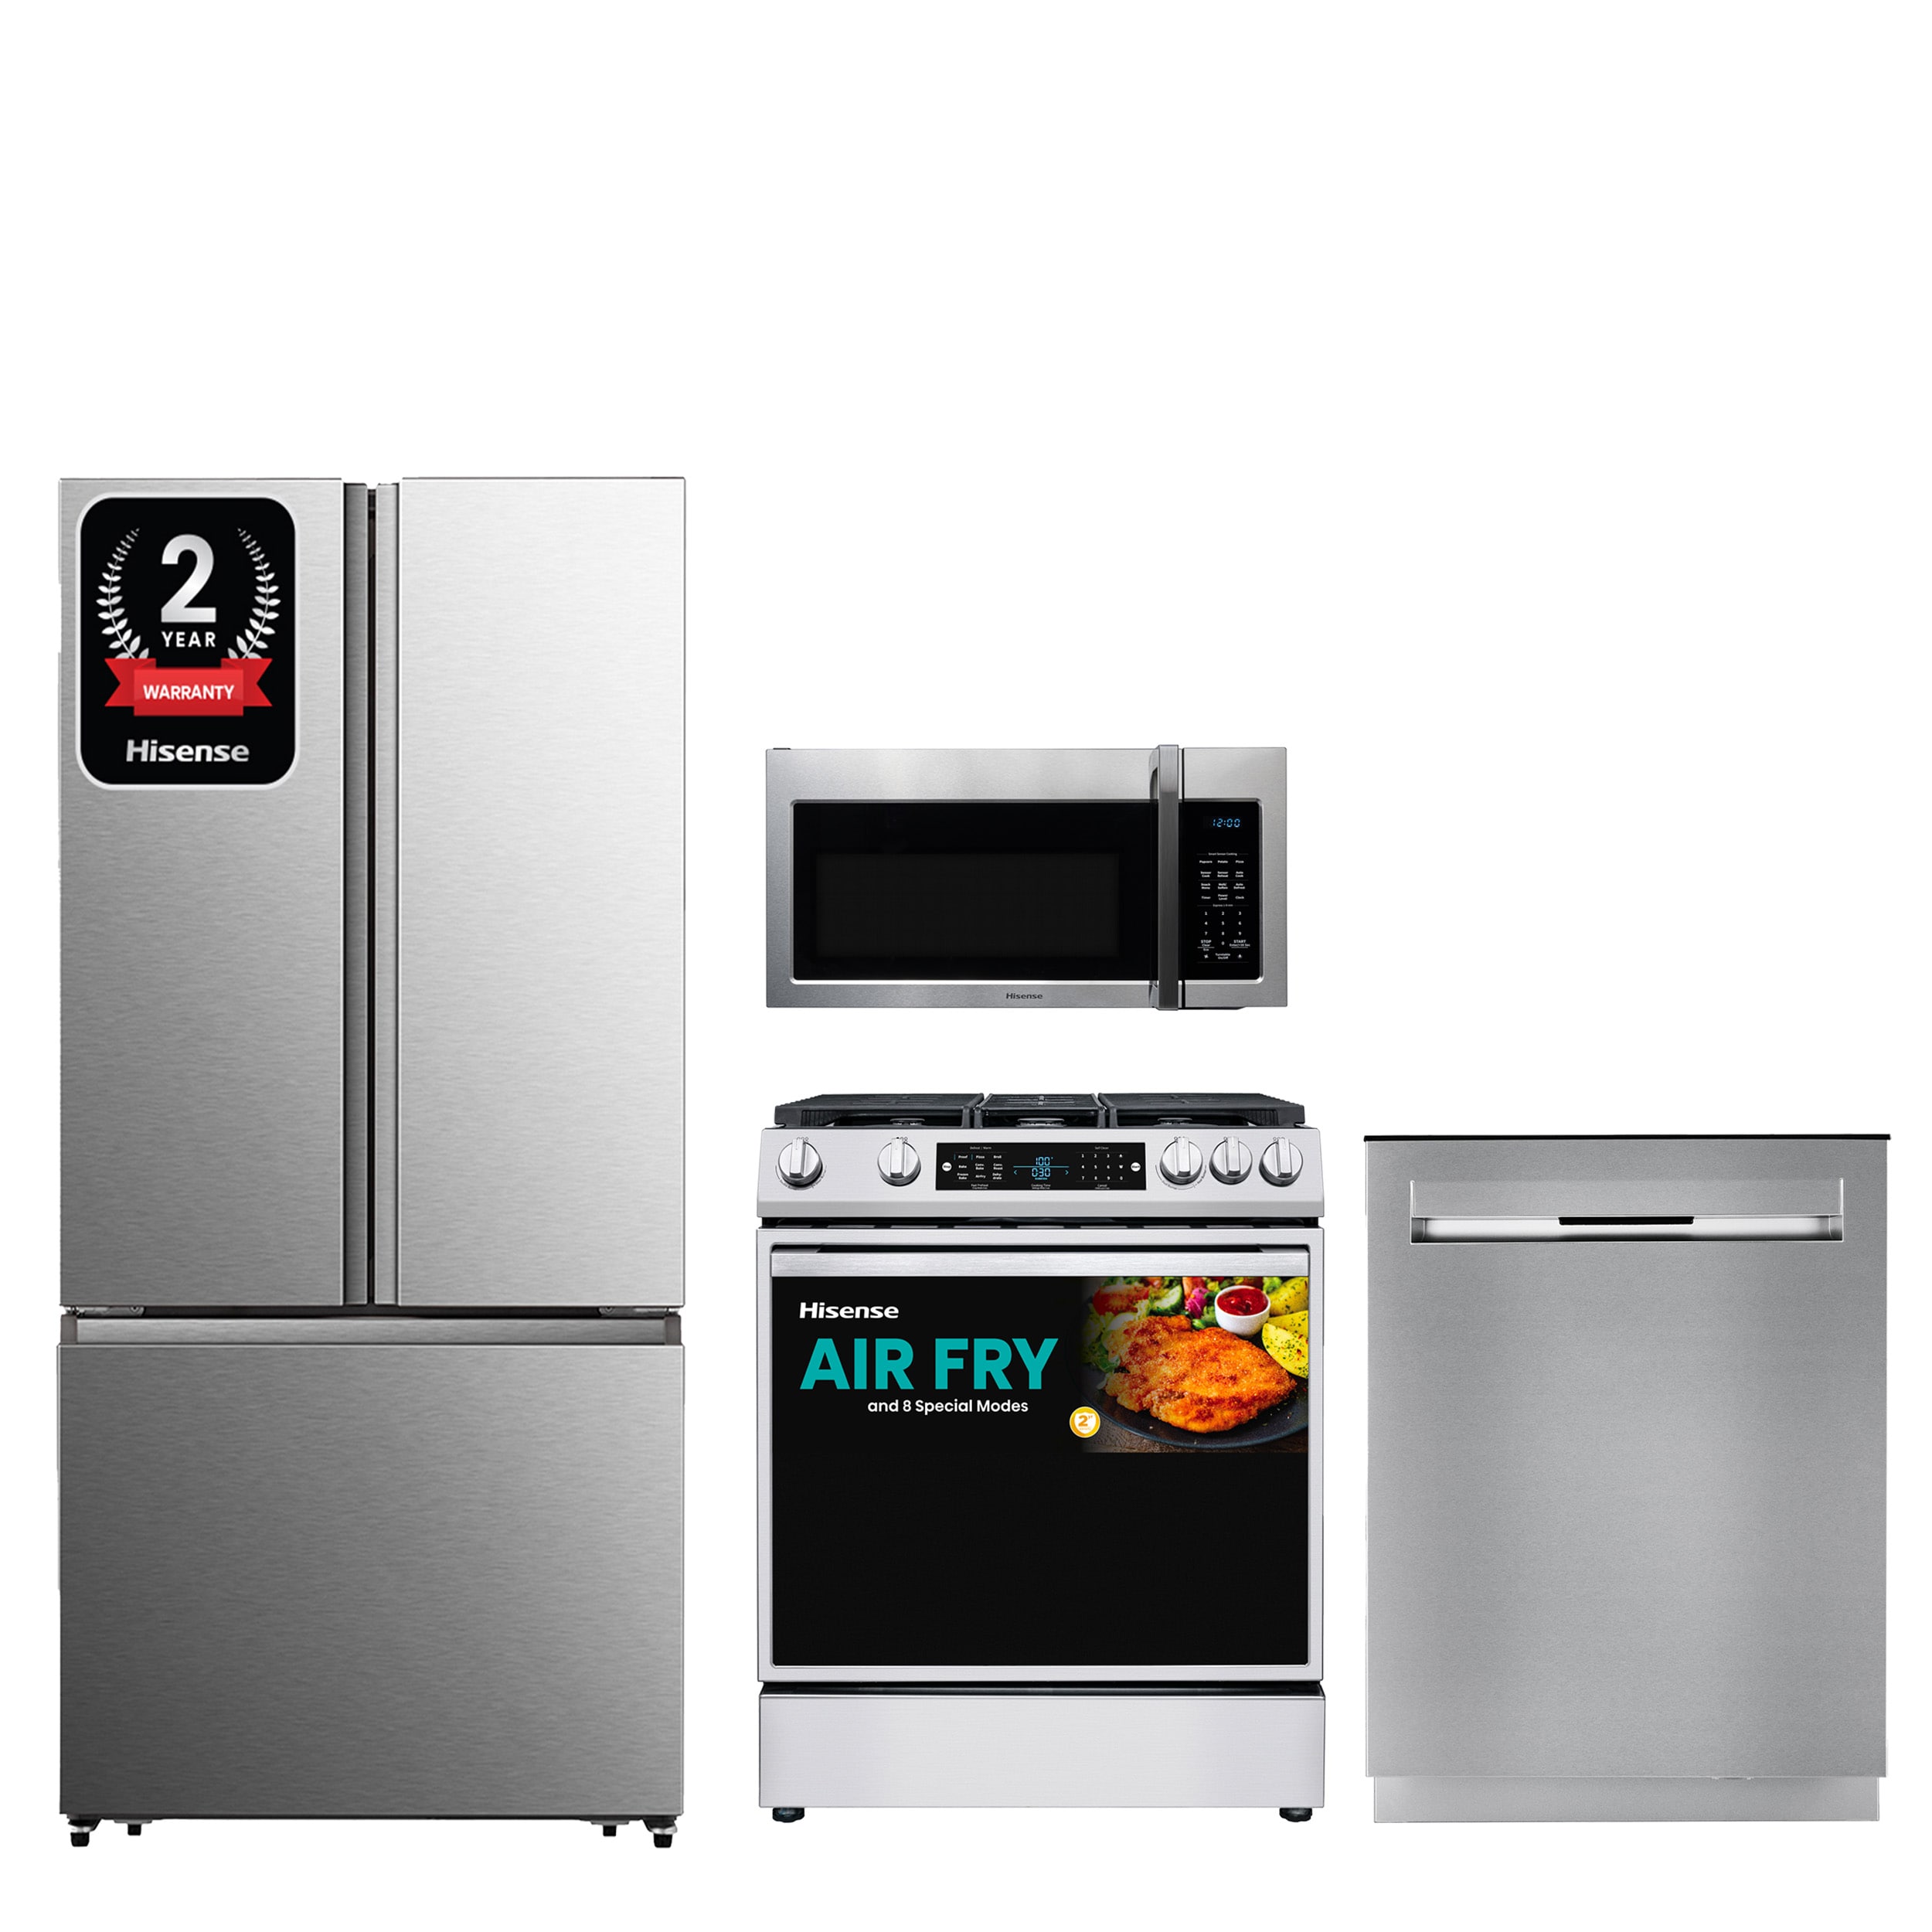 The best Black Friday kitchen appliance deals of 2020